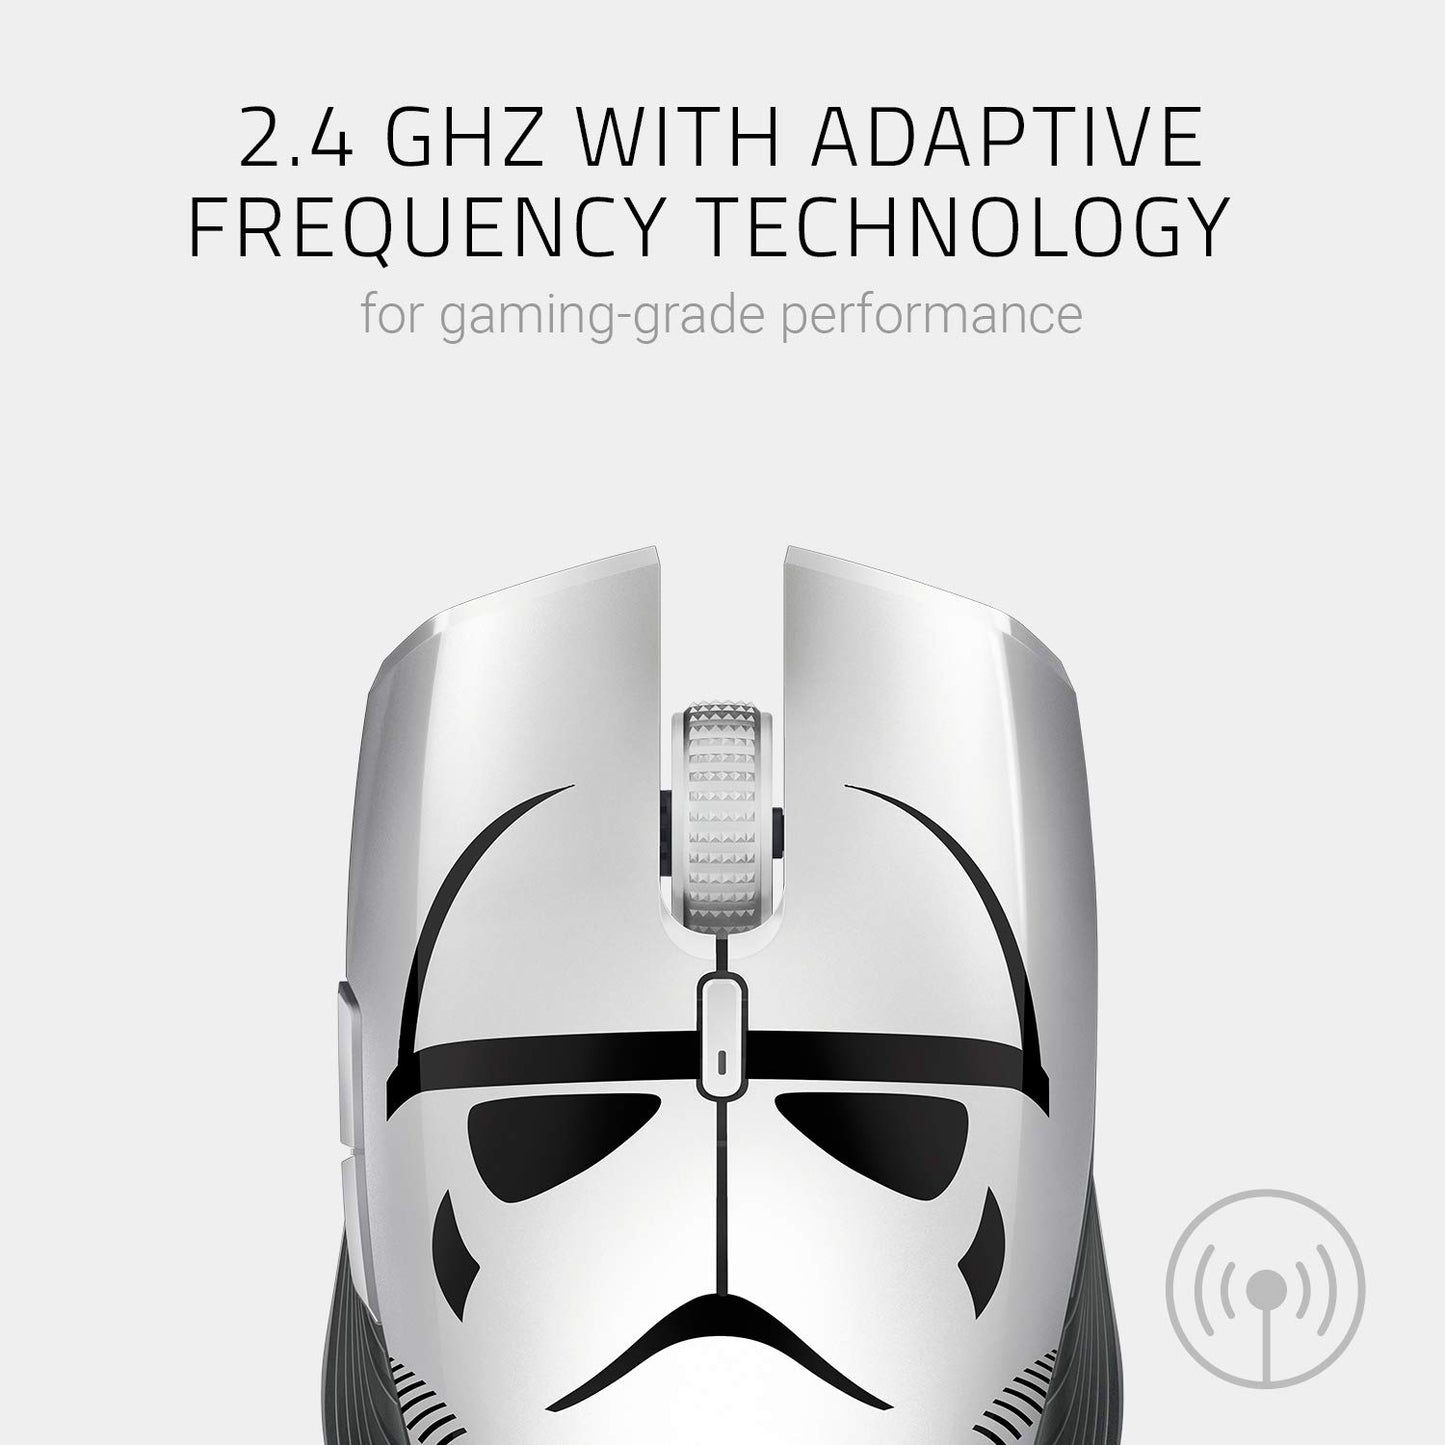 Razer Atheris Stormtrooper™ Wireless Gaming Mouse - 7,200 DPI Optical Sensor